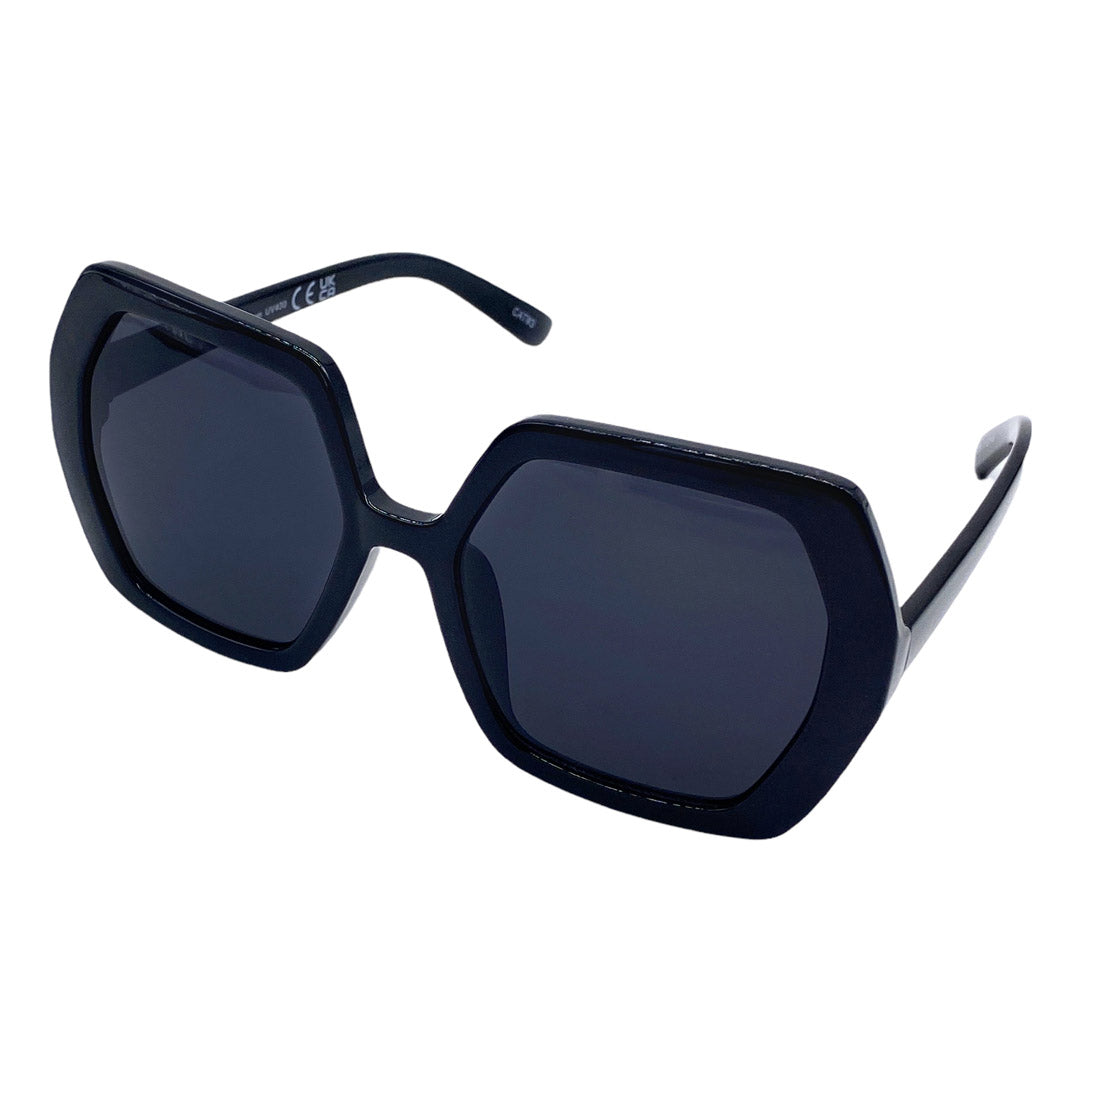 Empire Cove Oversized Square Sunglasses Hexagon Trendy Retro Classic Shades Sunnies, Black